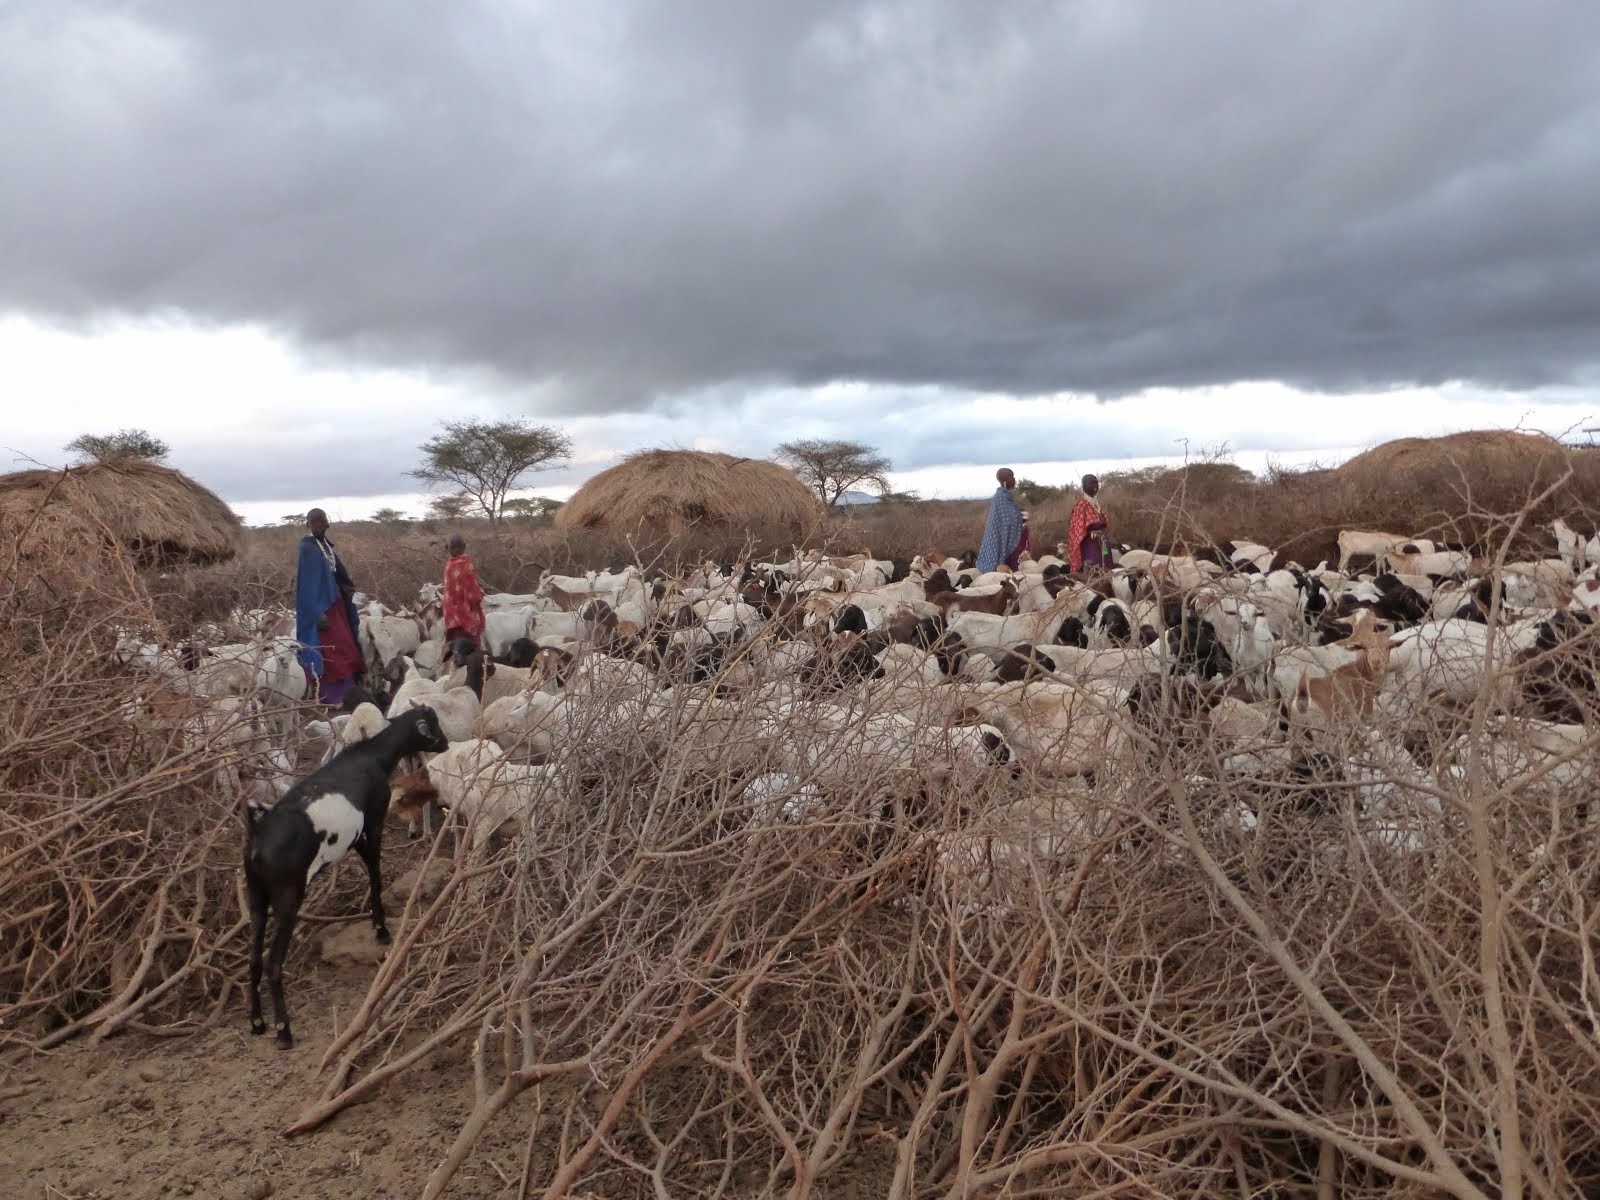 Maasai village and goat herd